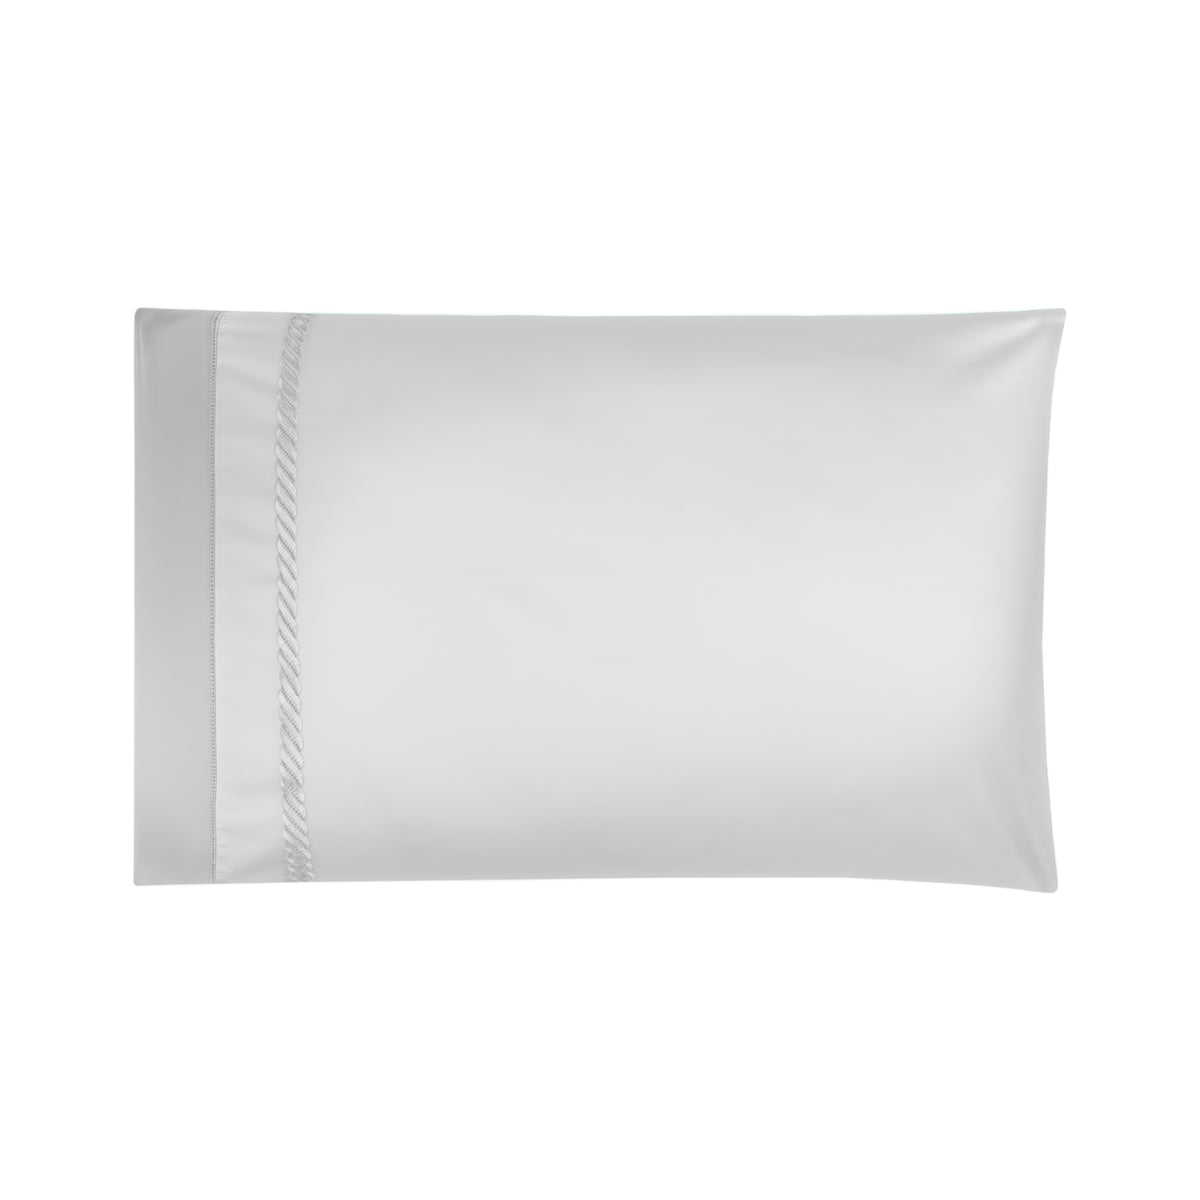 Silo of BOVI Simone Bedding Pillowcase White Silver Colored